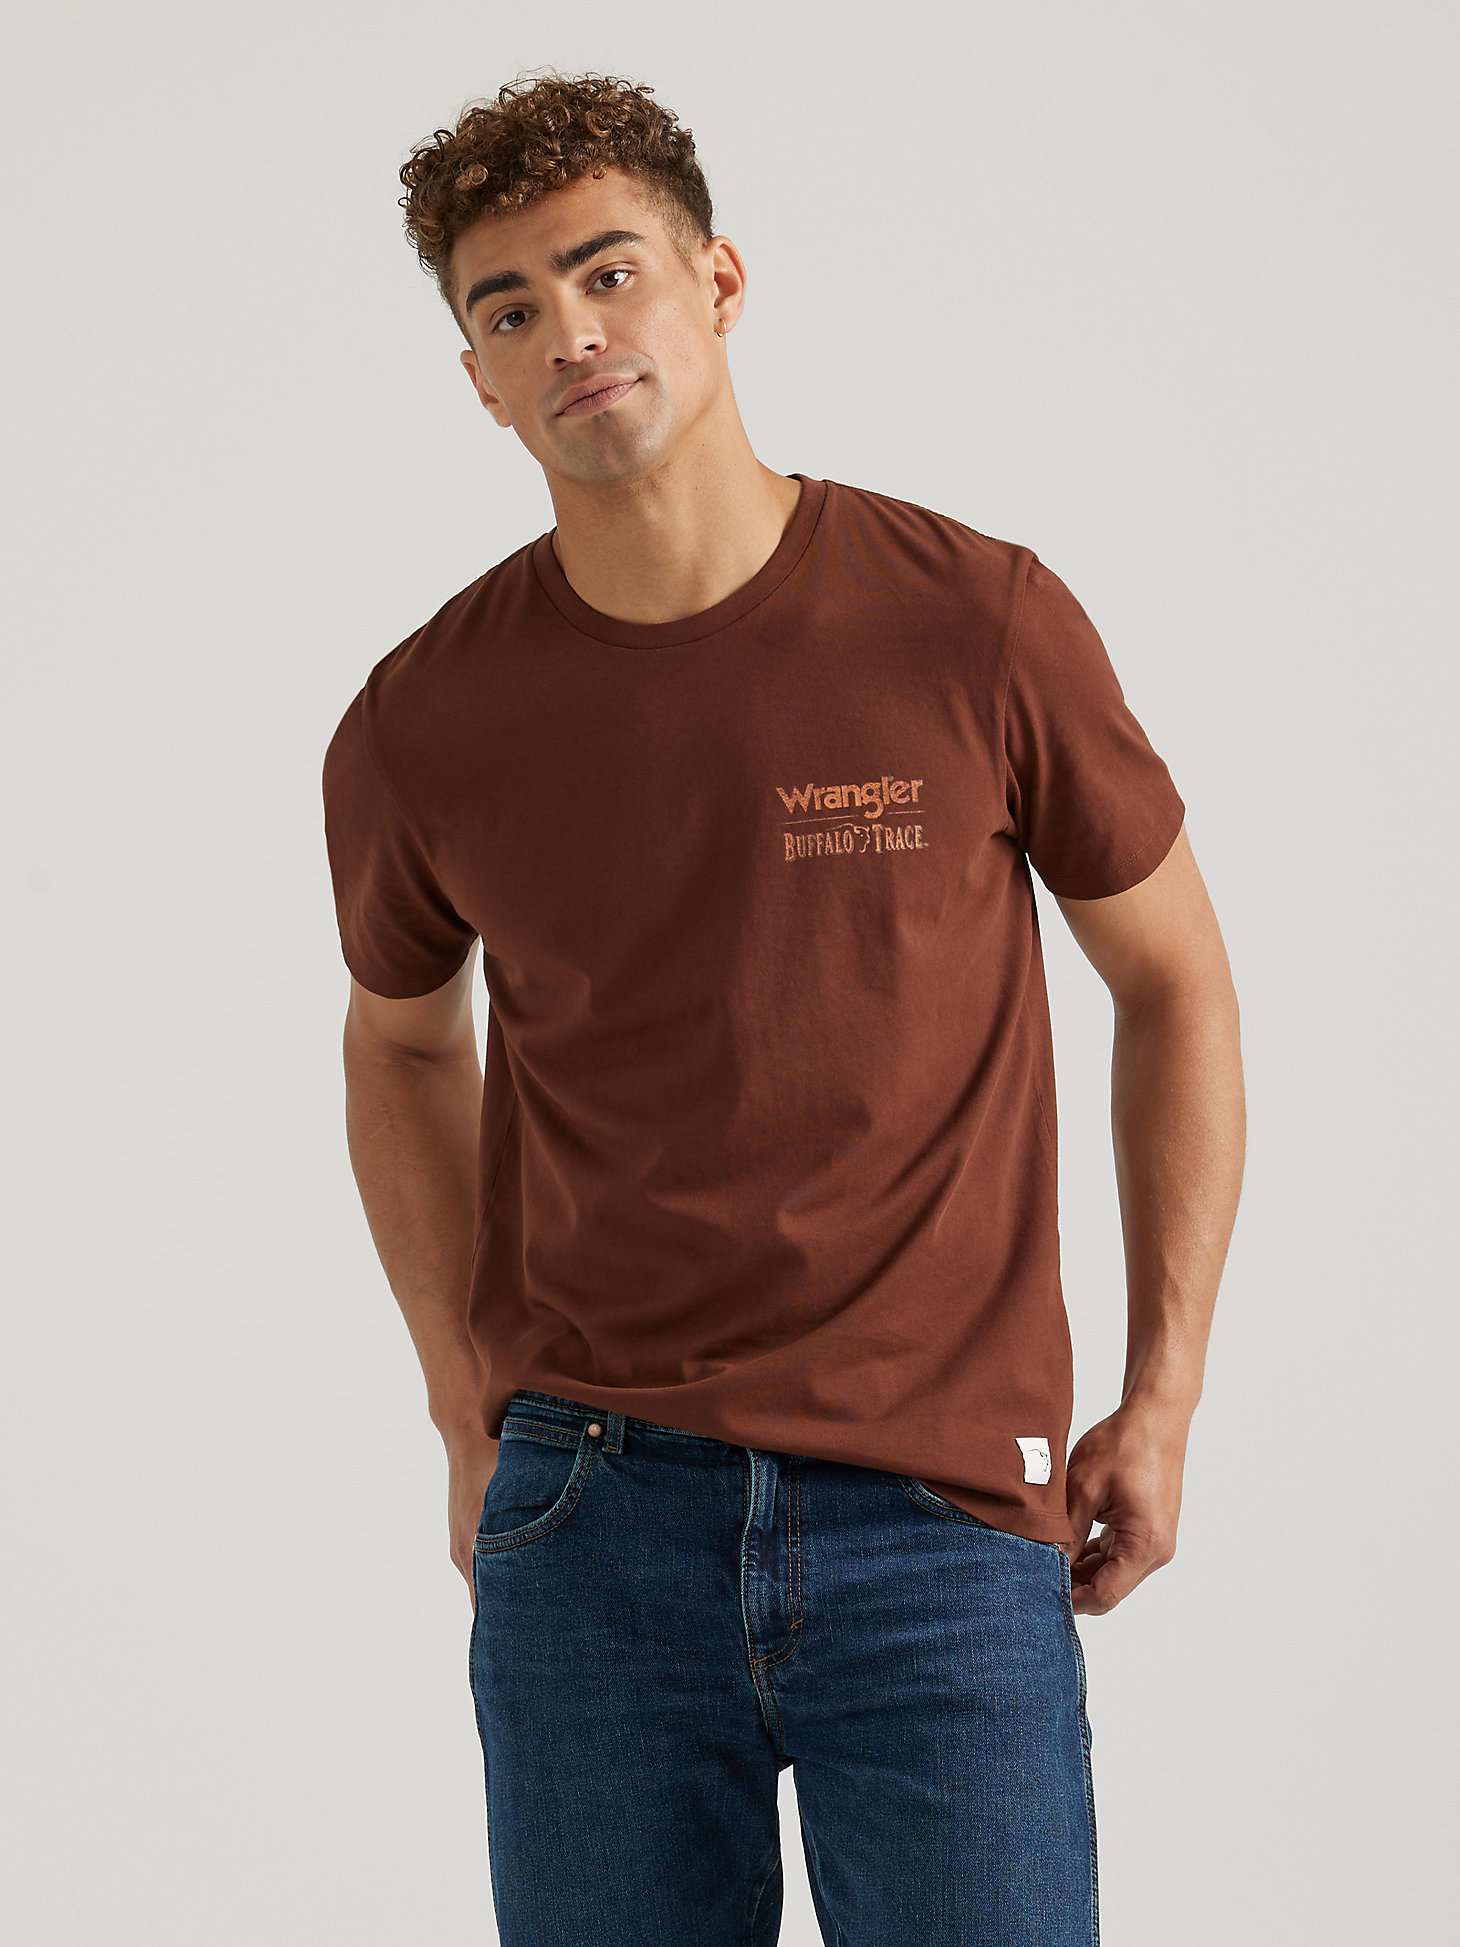 Wrangler x Buffalo Trace™ Men's Oak Aged T-Shirt in Brown Grains alternative view 2